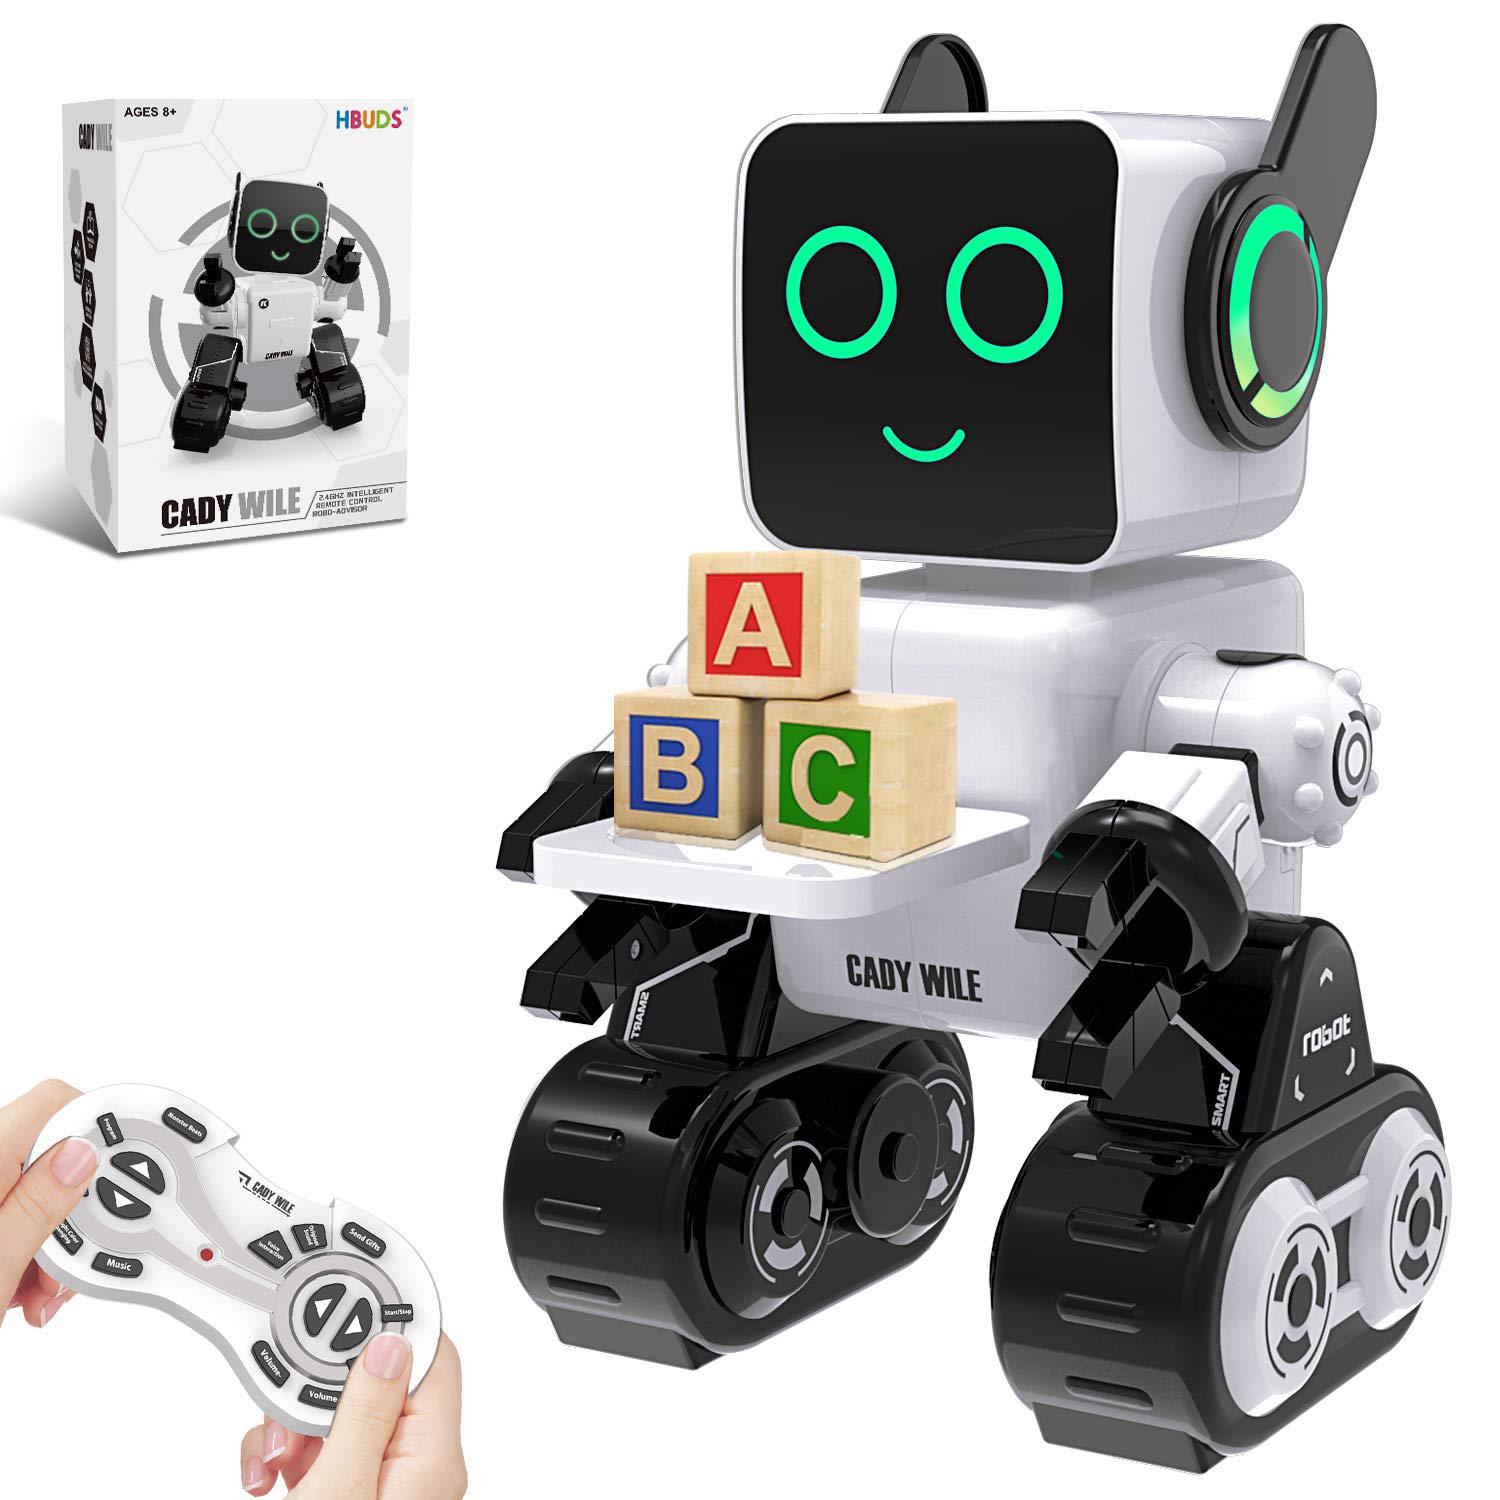 hbuds robots for kids, remote control robot toy intelligent interactive robot led light speaks dance moves built-in coin bank progr